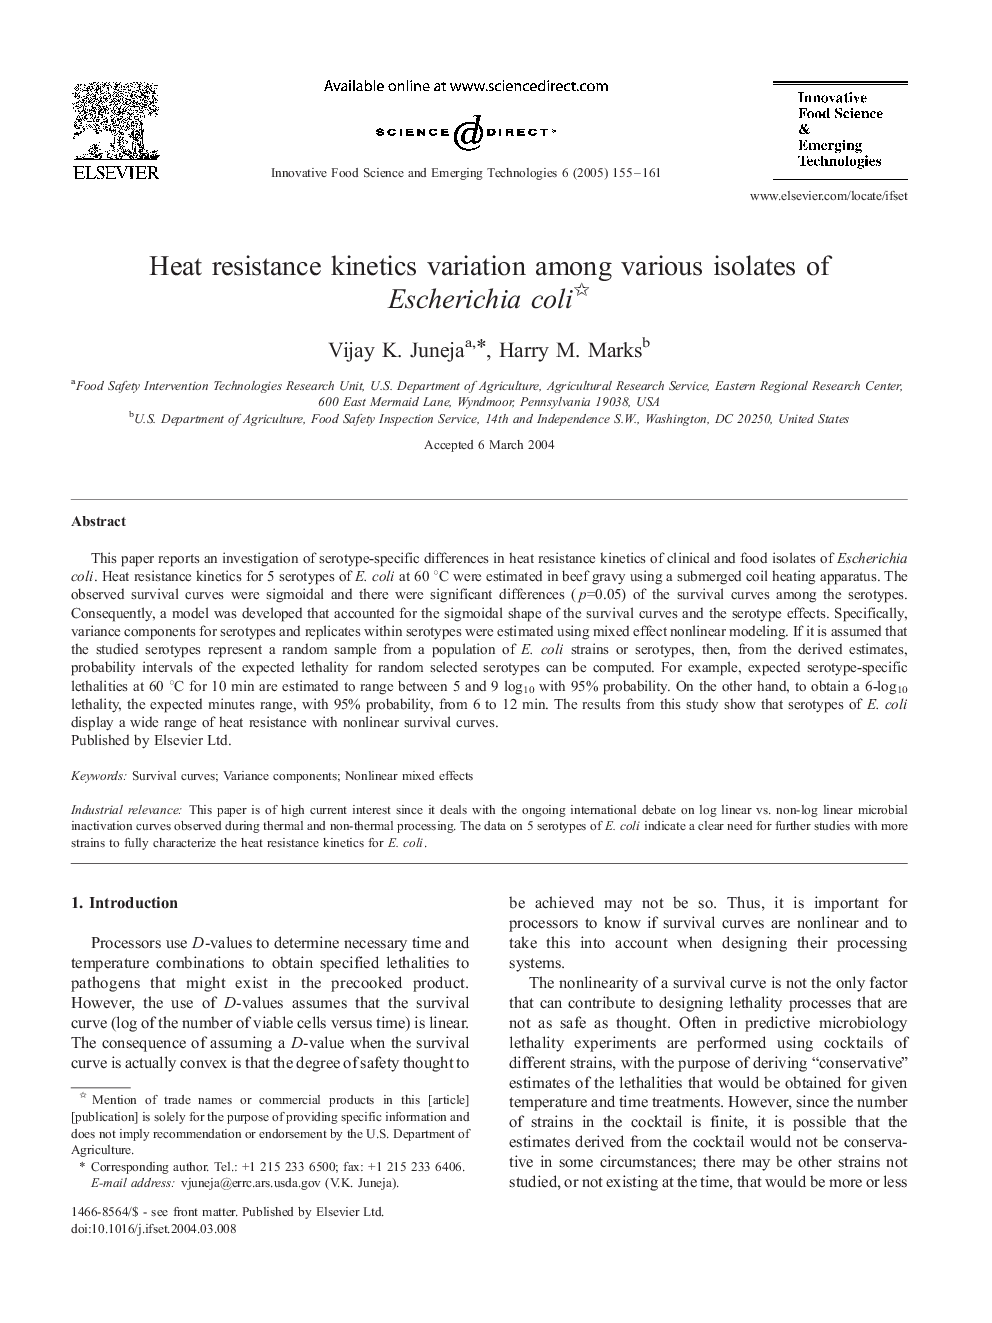 Heat resistance kinetics variation among various isolates of Escherichia coli